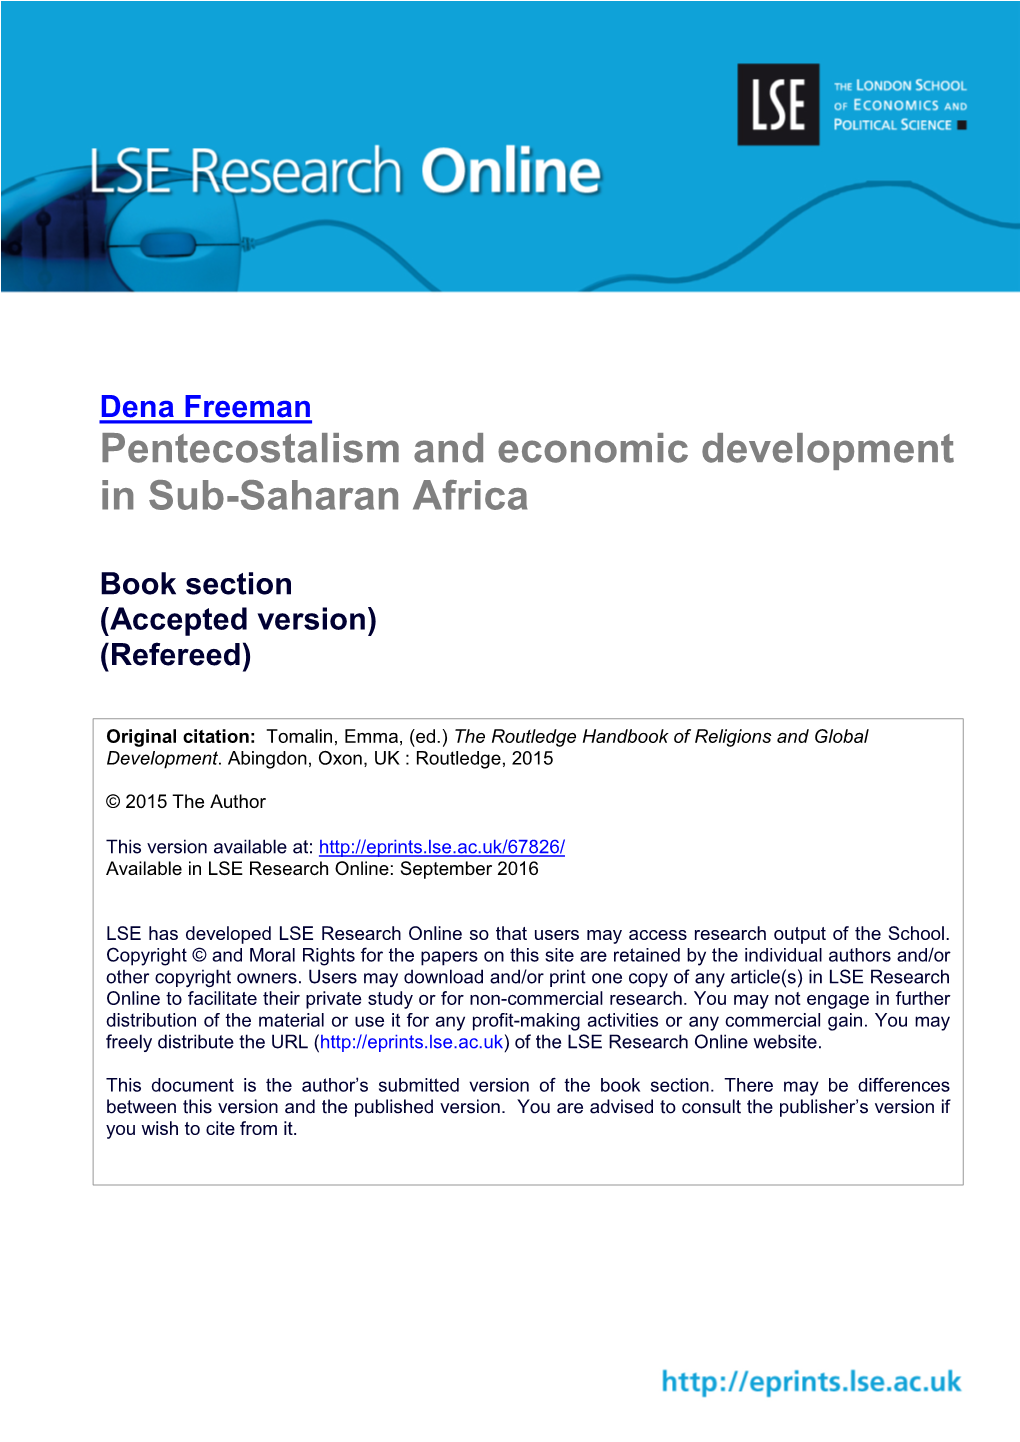 Pentecostalism and Economic Development in Sub-Saharan Africa